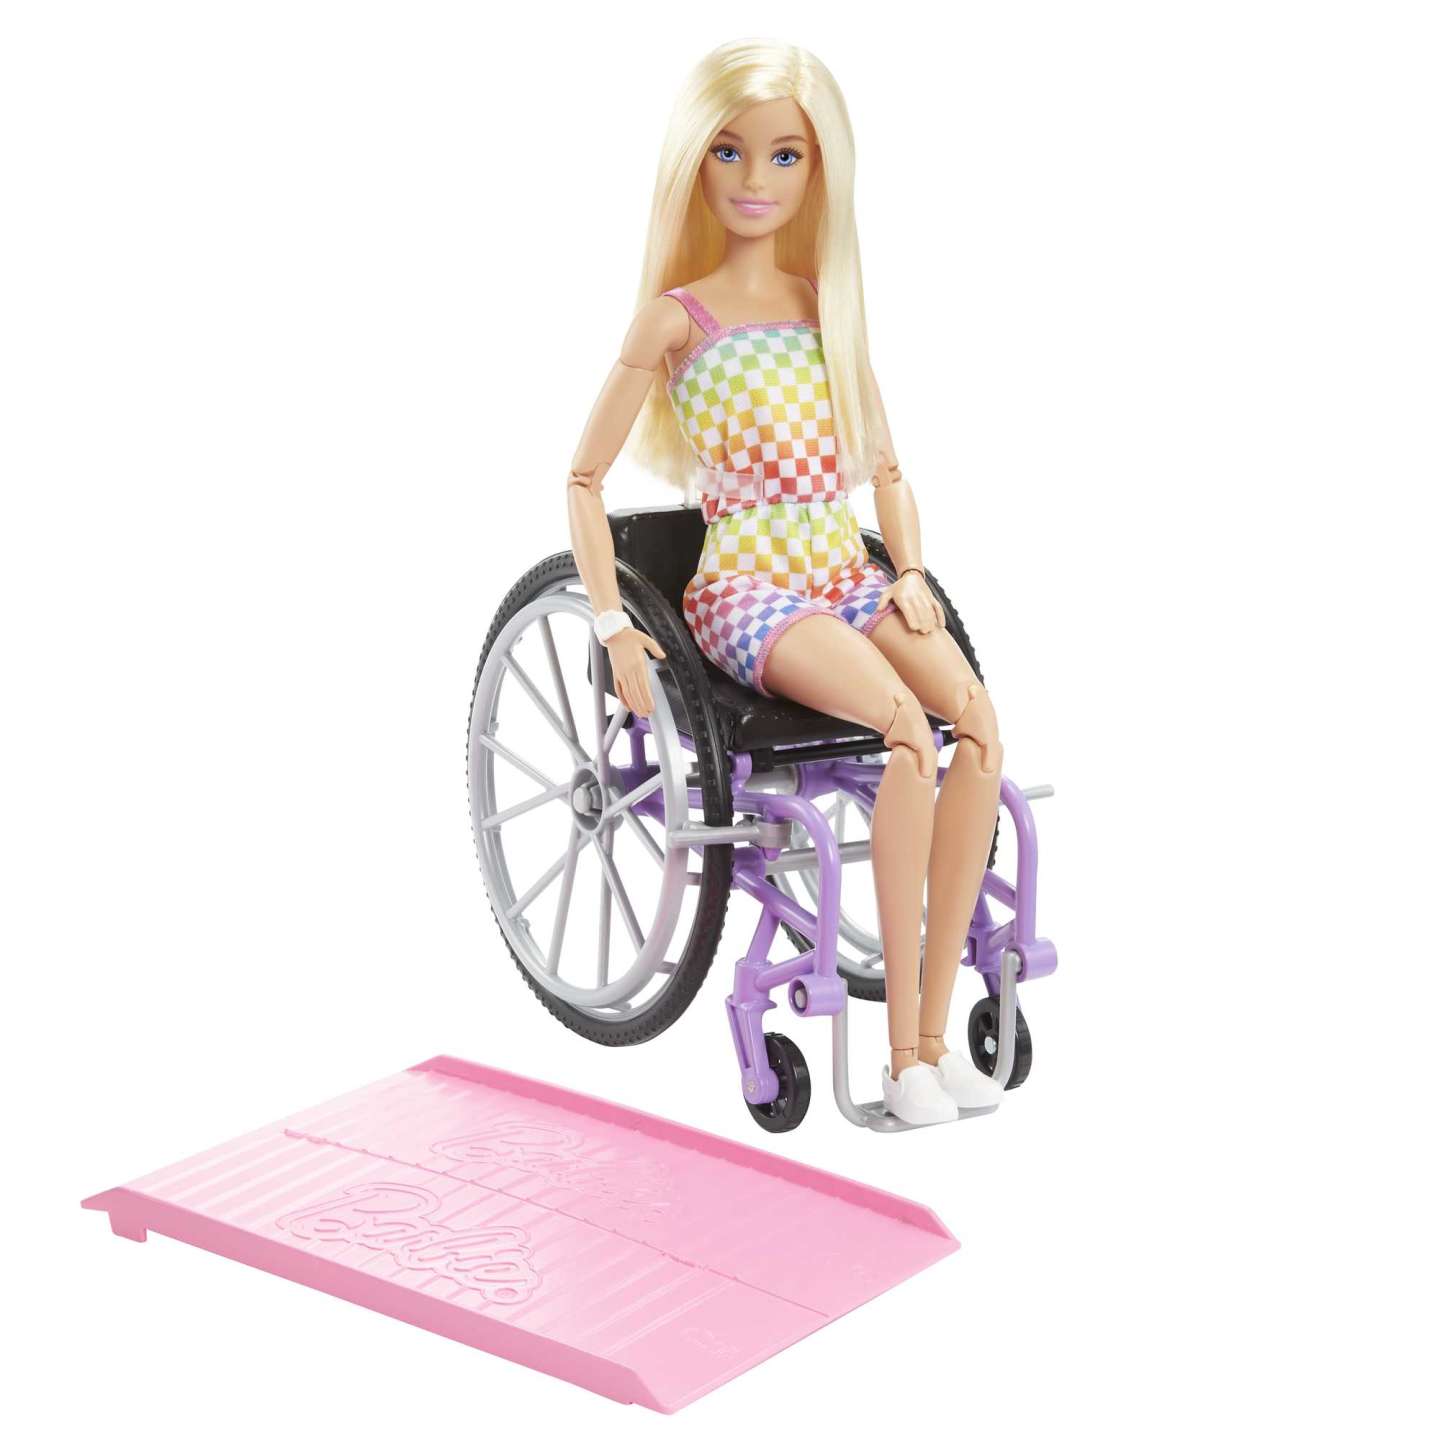 Barbie ברבי פאשניסטה עם כיסא גלגלים